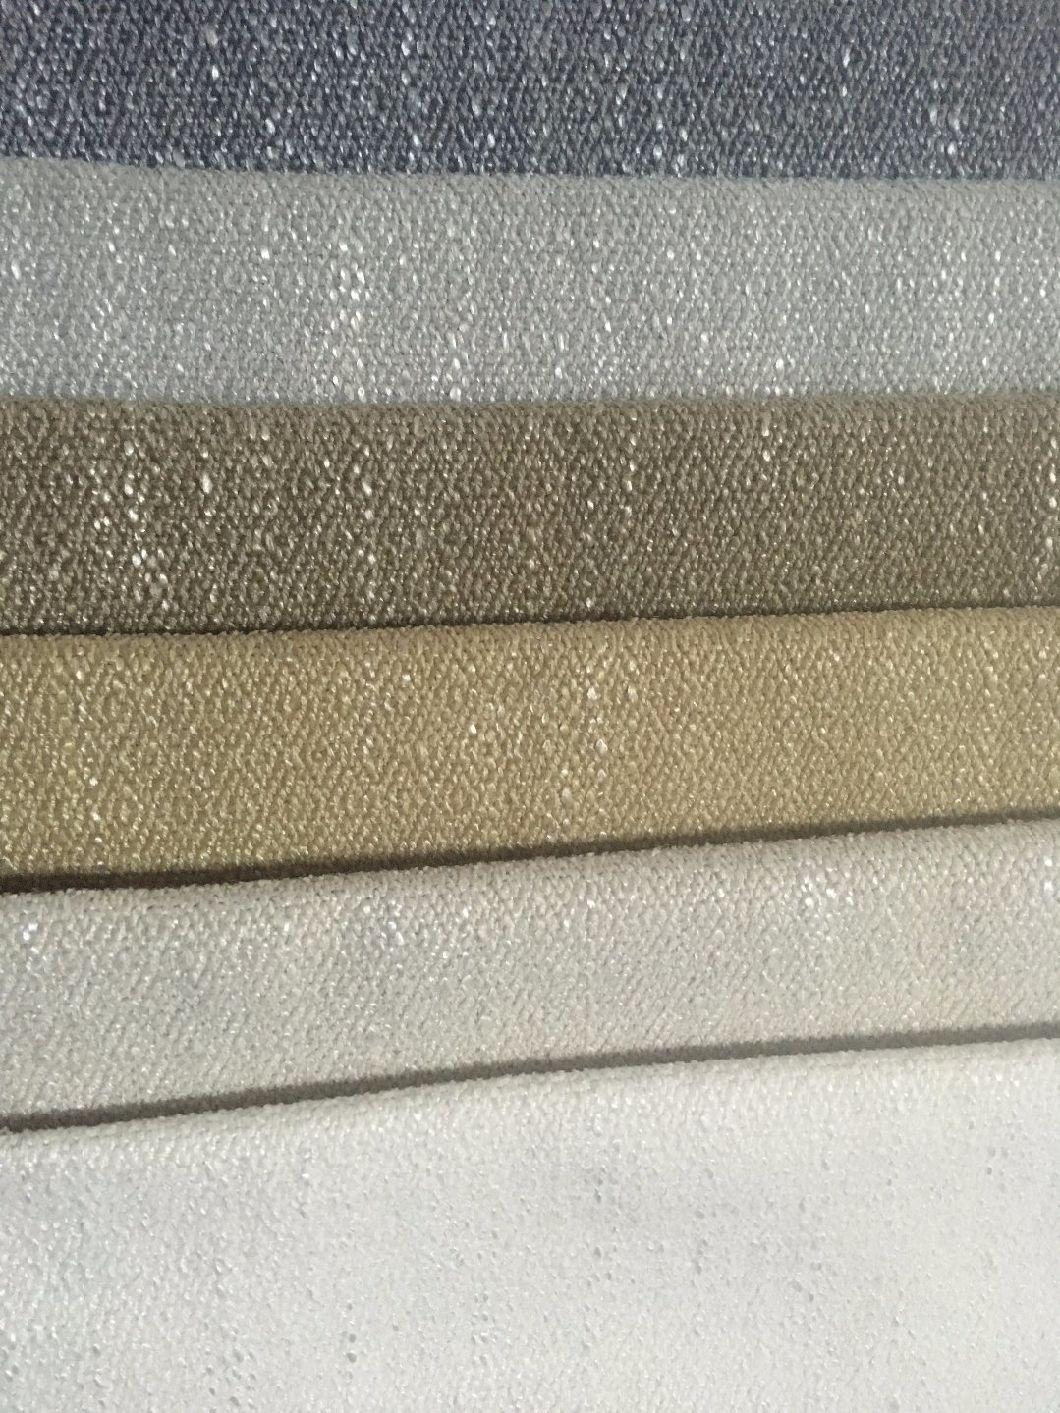 Plain Woven Sofa Fabric/Thick Polyester Sofa Fabric